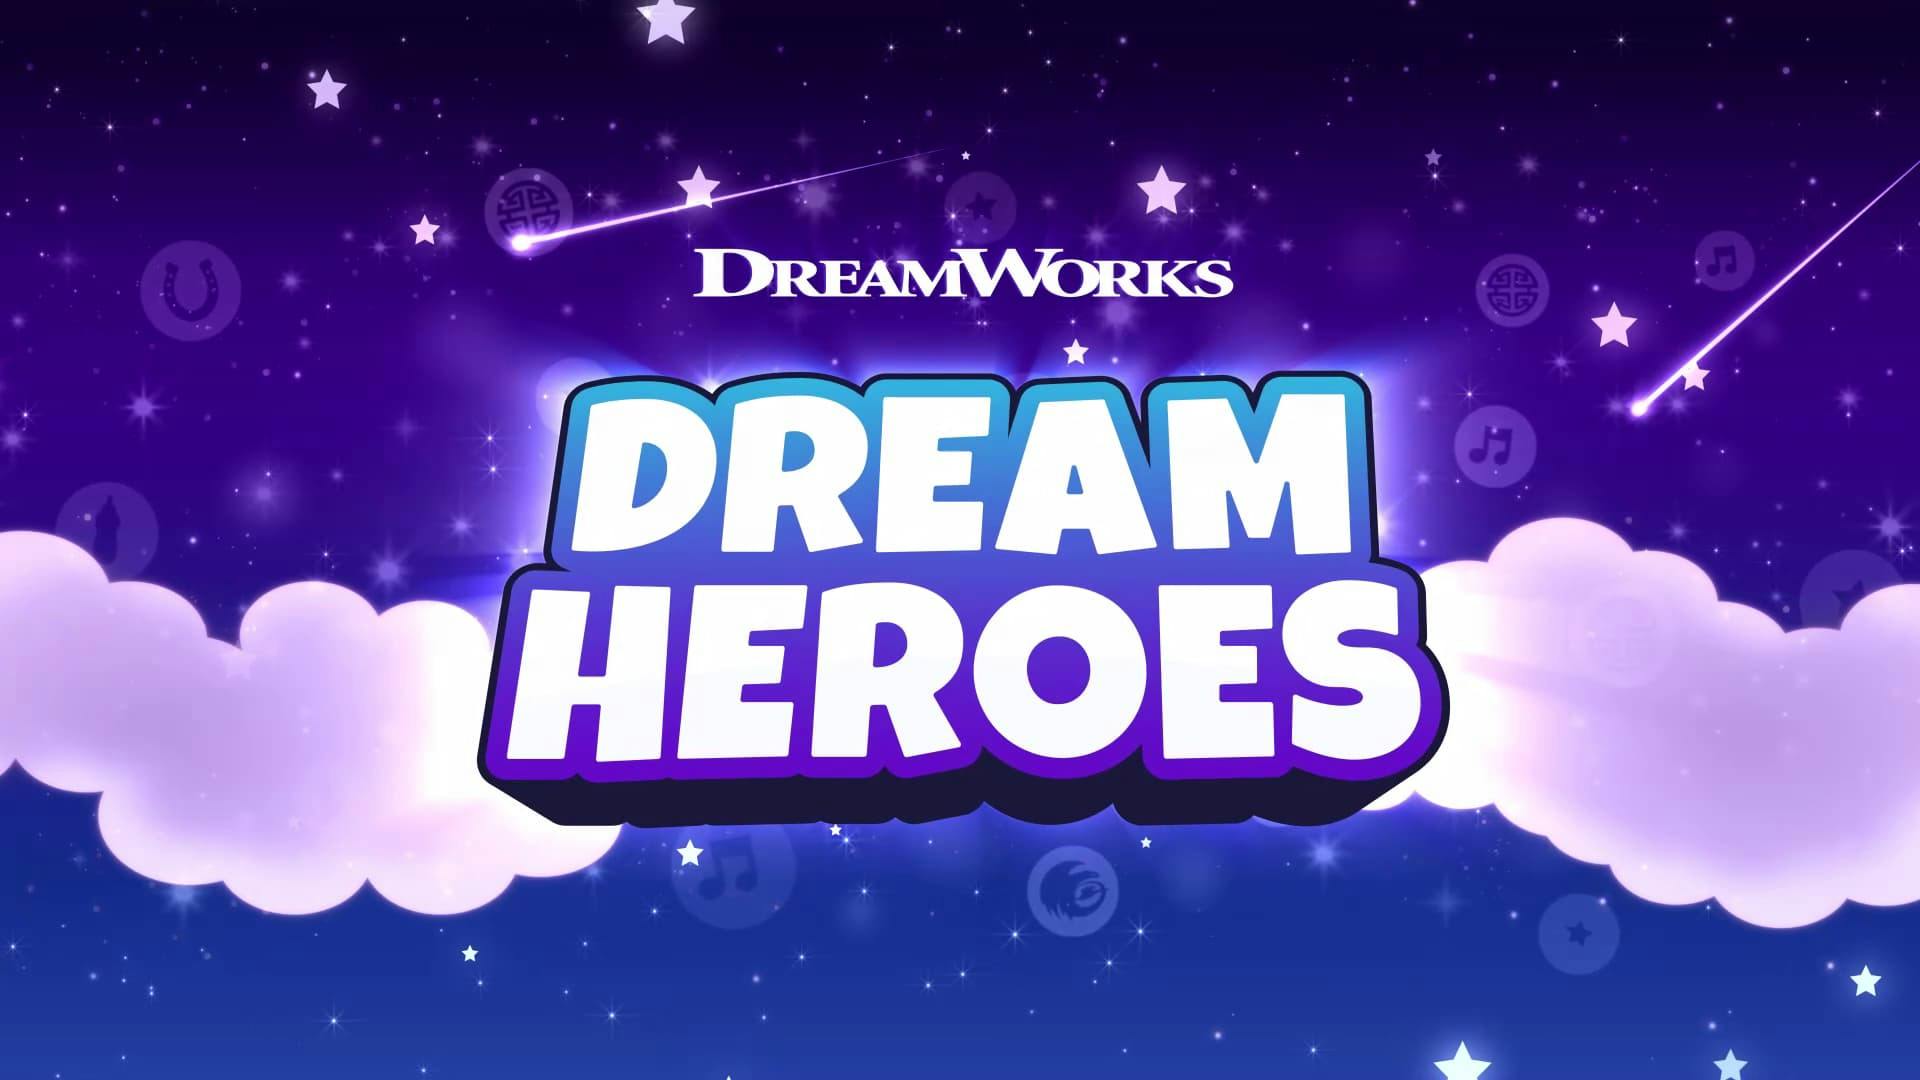 DreamWorks Dream Heroes logo sits on a starry night sky.